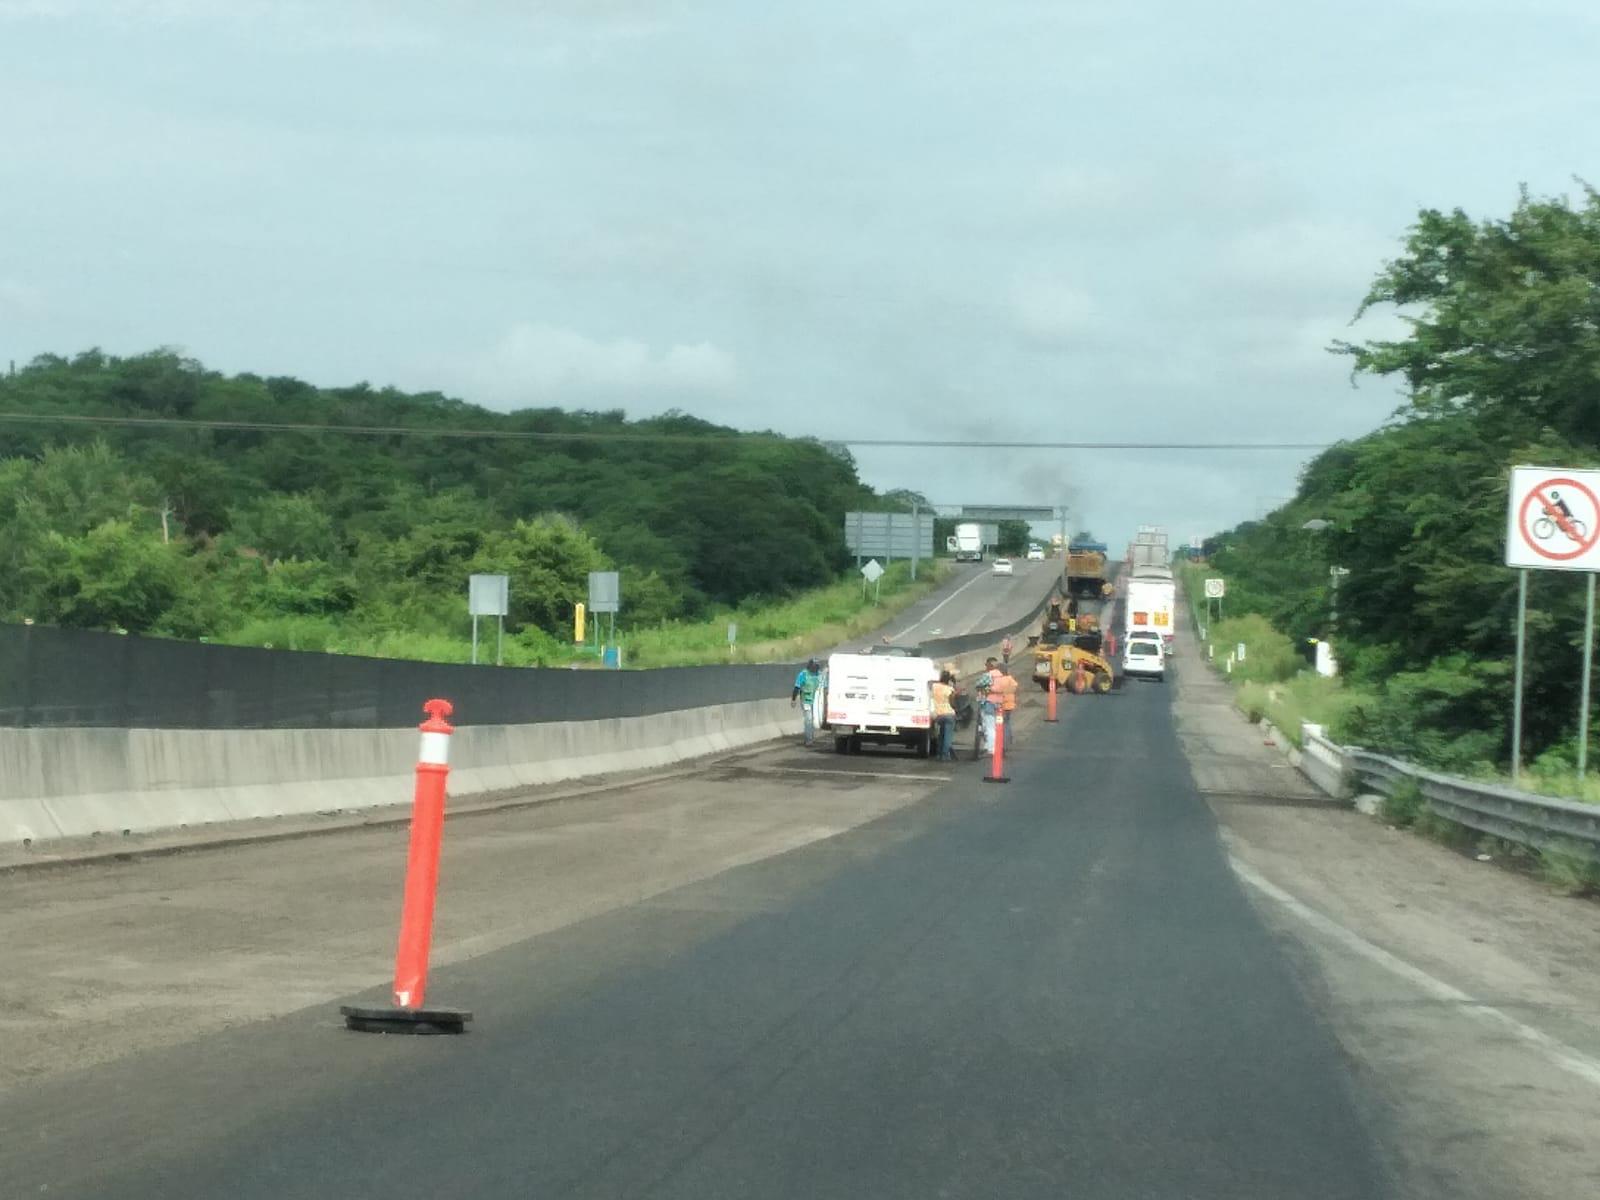 $!Por retén de la FGR en caseta de Mármol, se congestiona la autopista Mazatlán-Culiacán